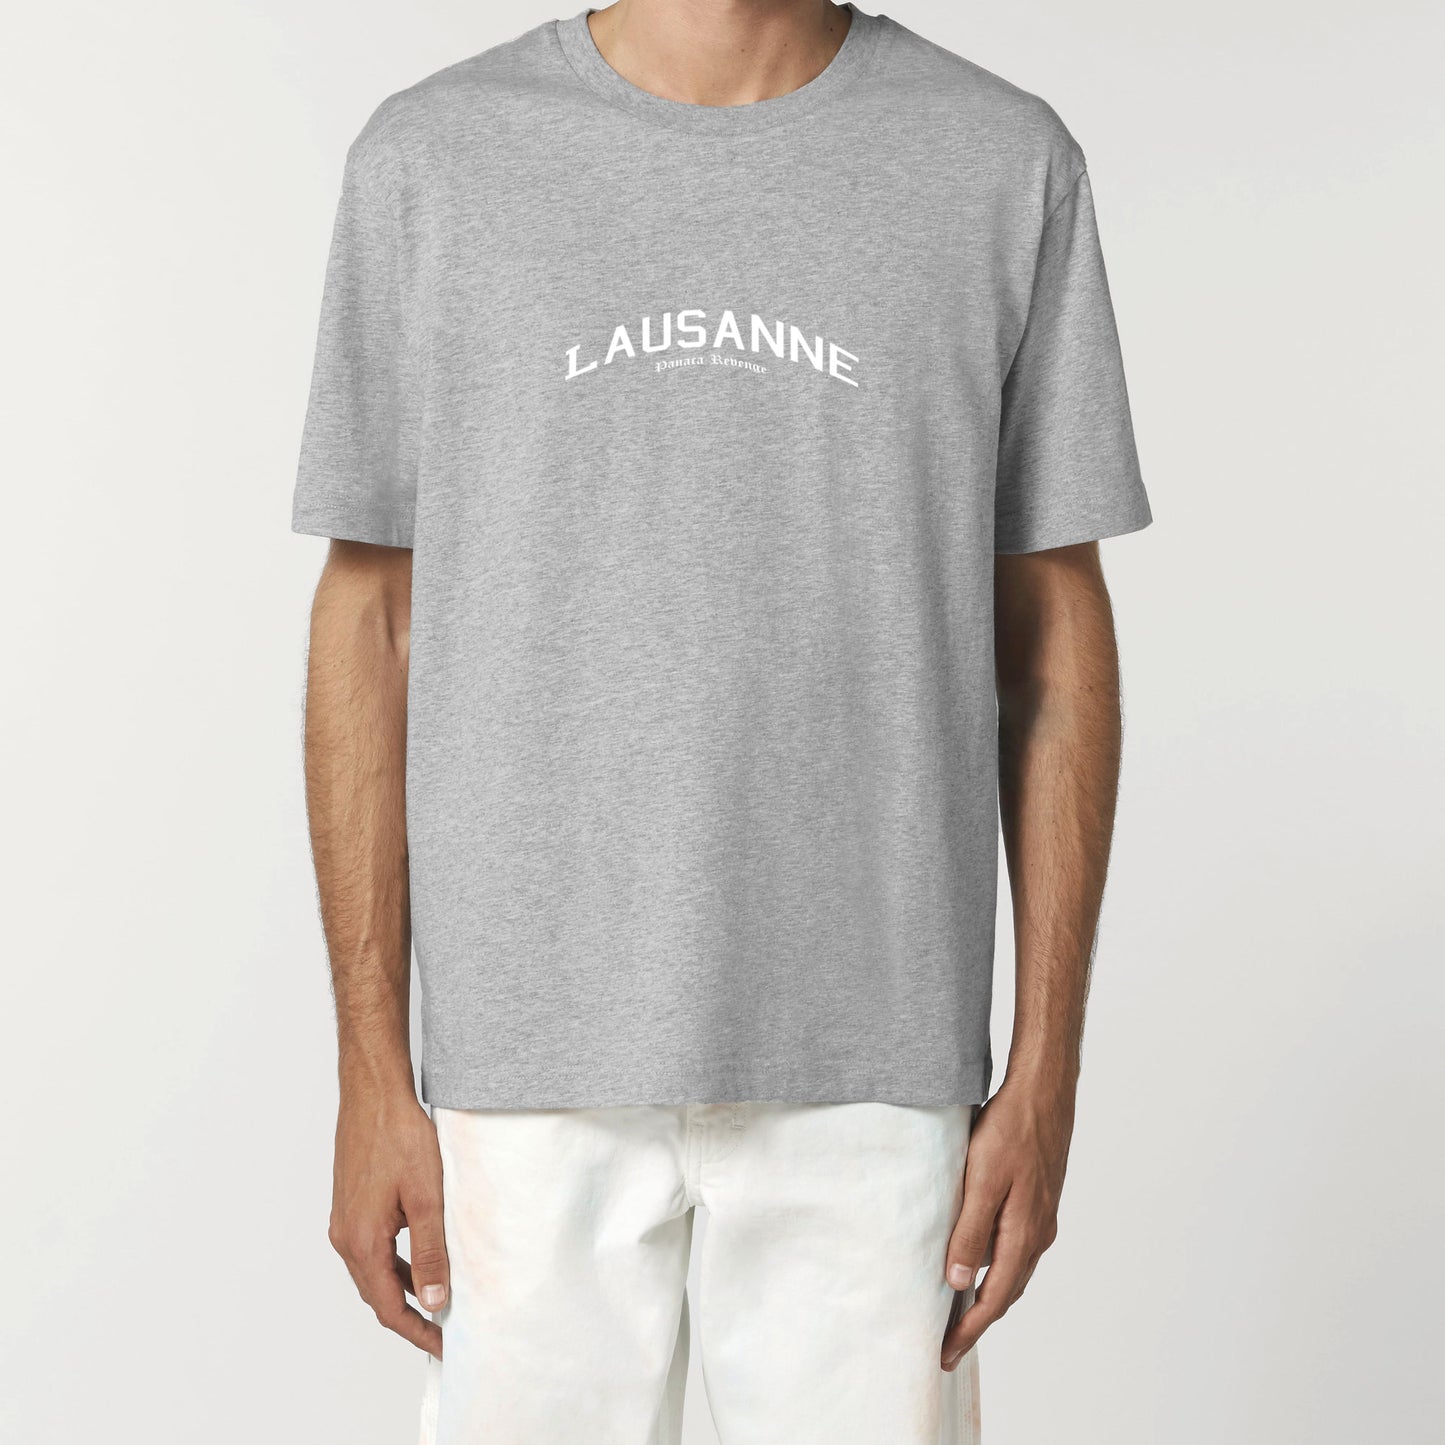 T-Shirt Lausanne